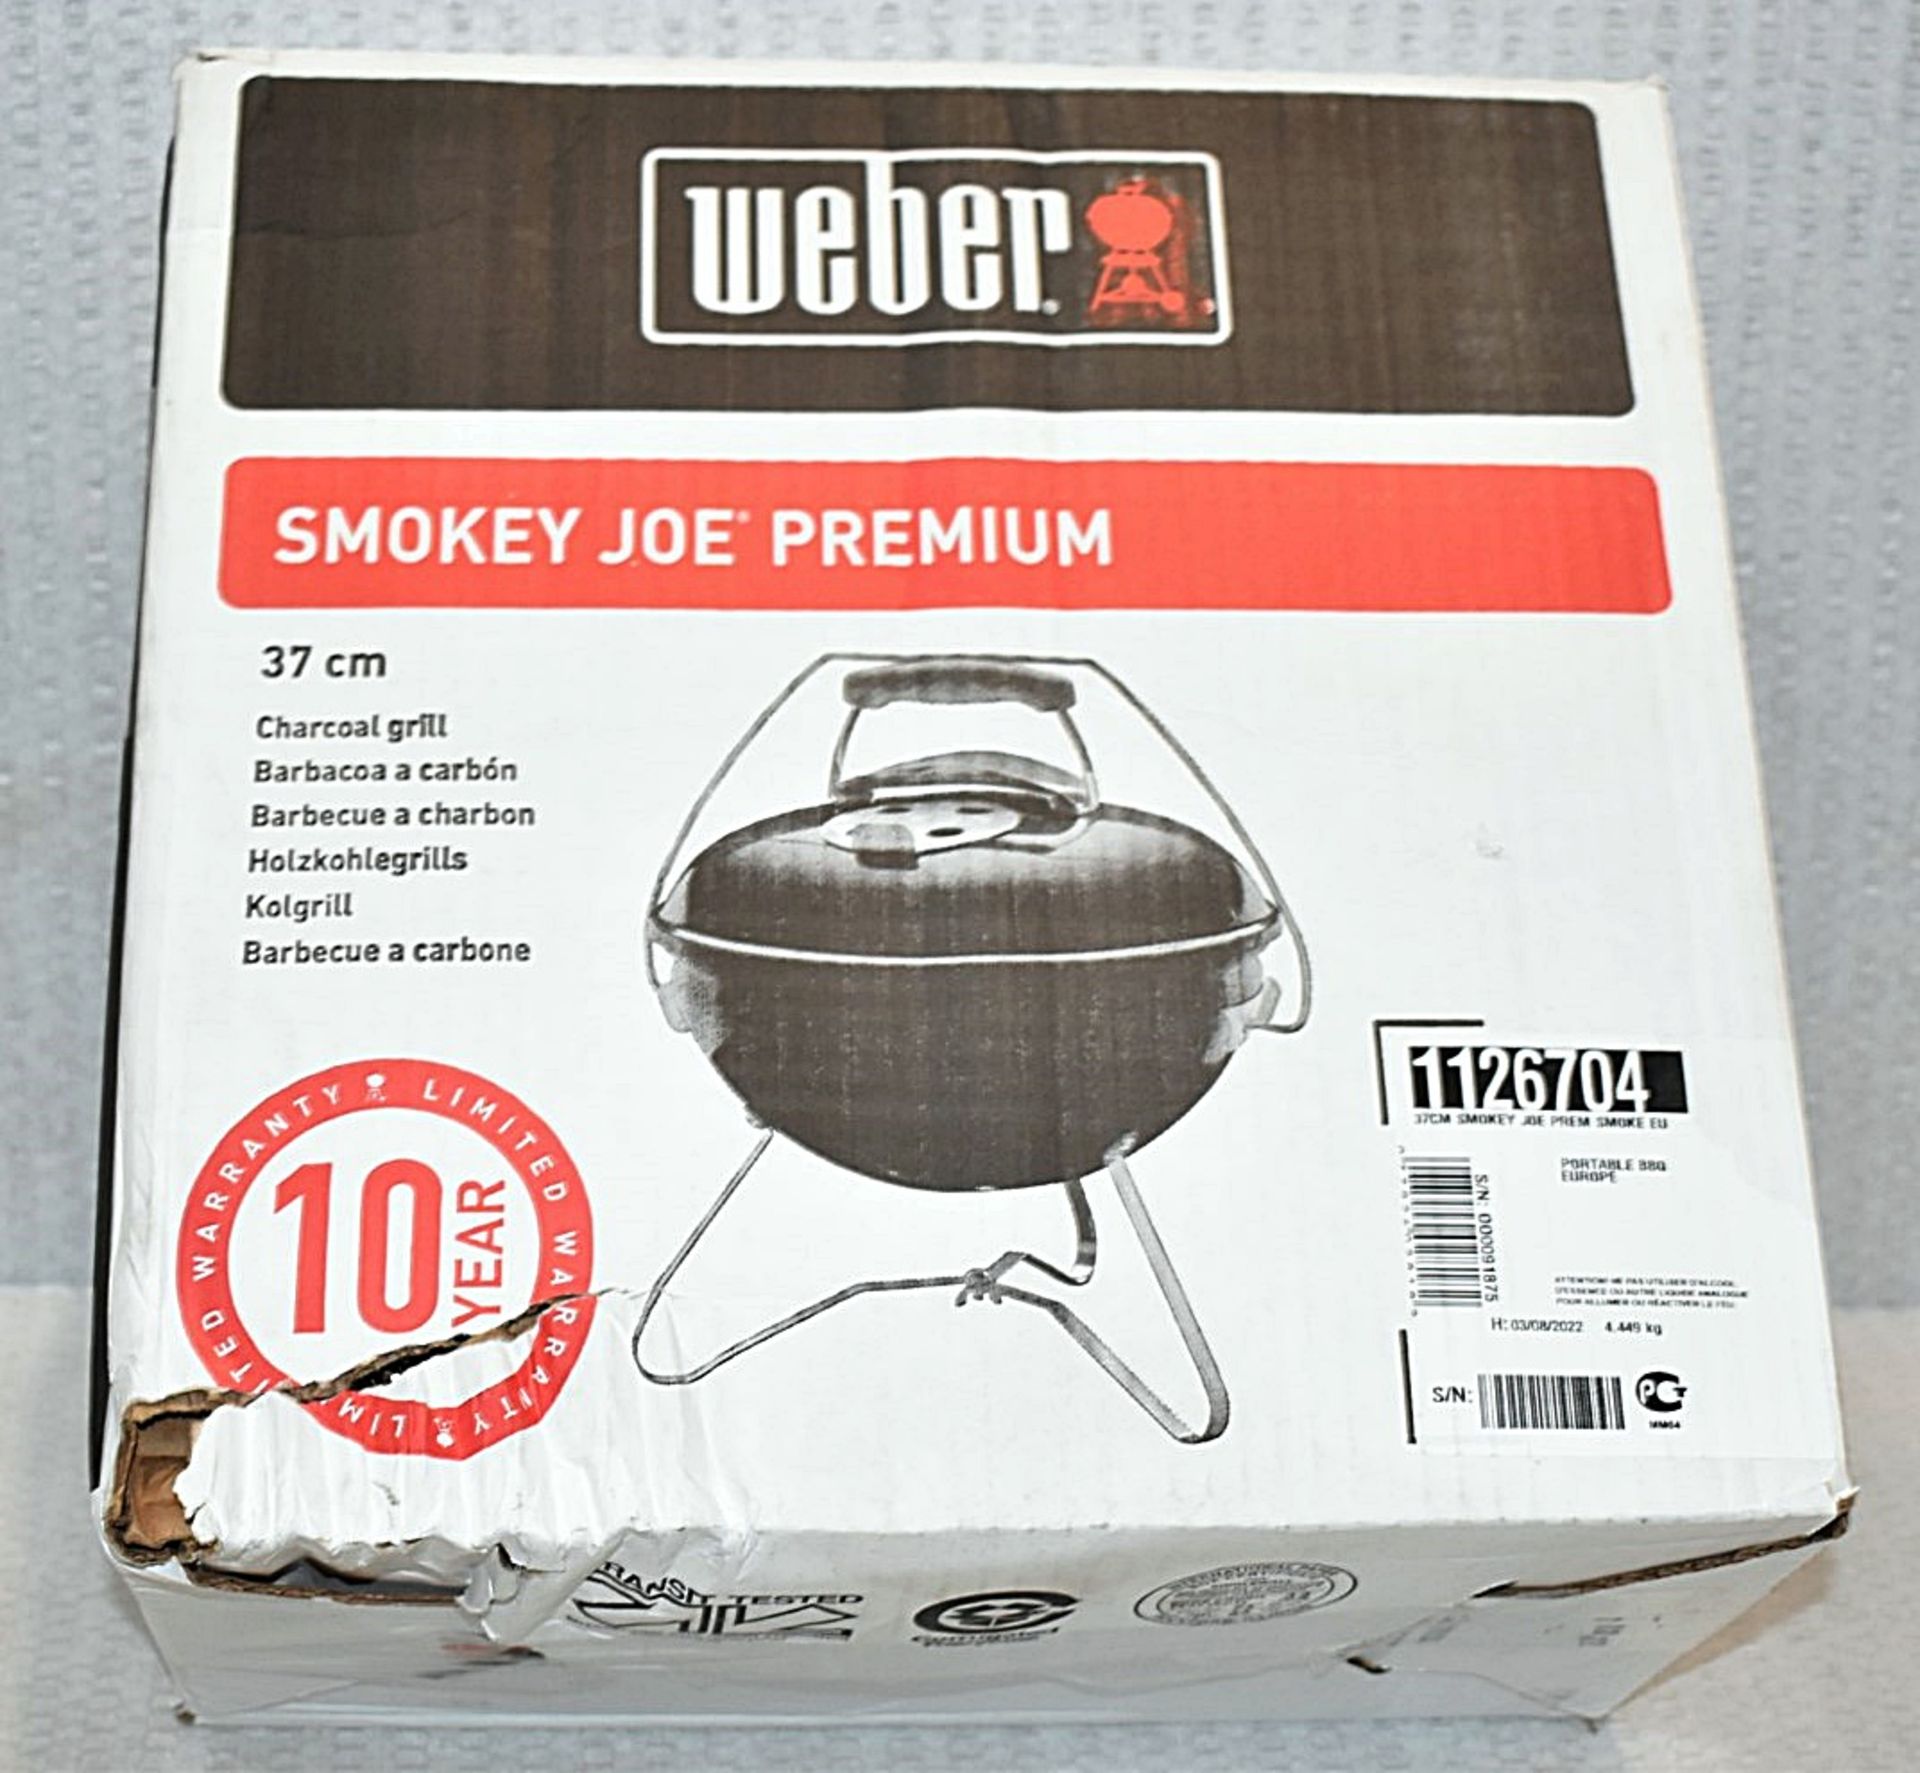 1 x WEBER Smokey Joe Premium Charcoal Portable Barbecue, in Smoke Grey £102.99 - Unused Boxed - Image 2 of 13